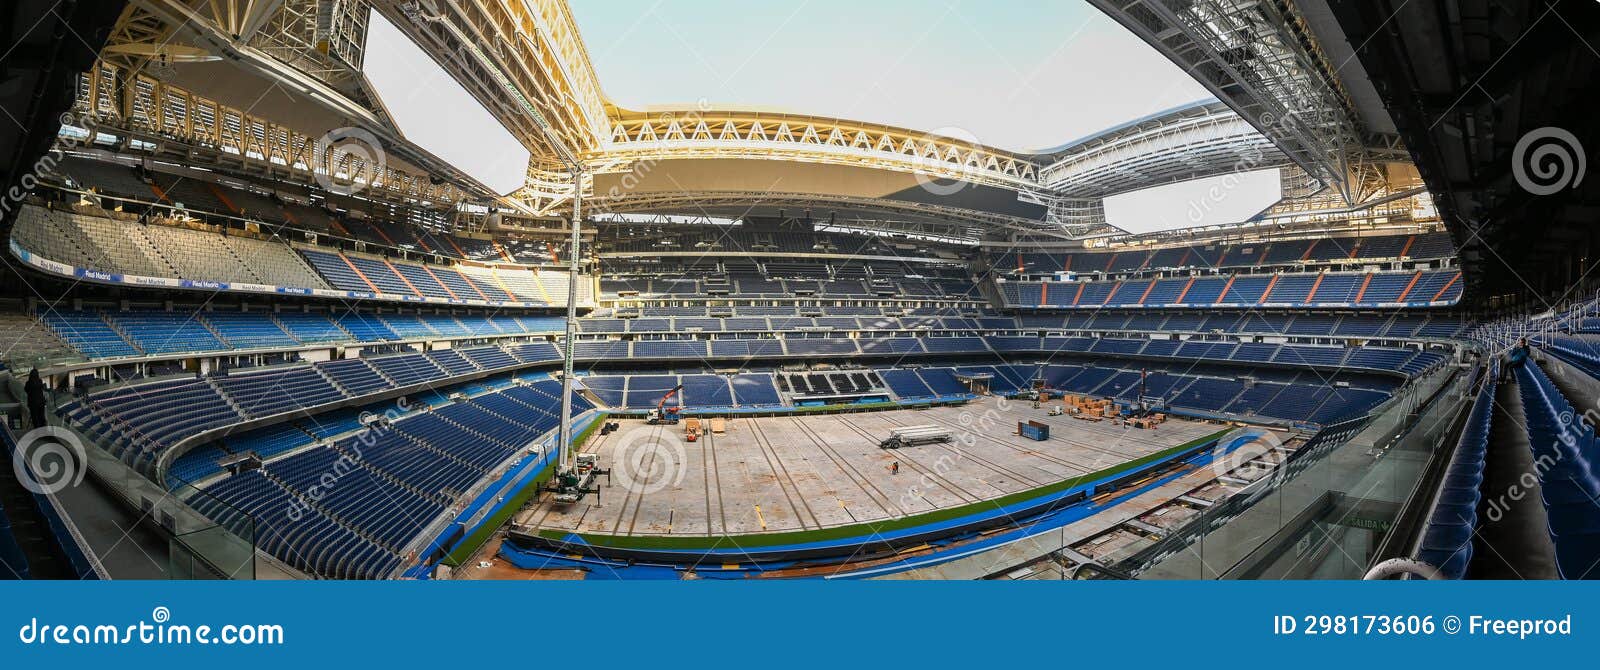 madrid, spain - november 16, 2023:renovation works in the santiago bernabeu stadium, real madrid